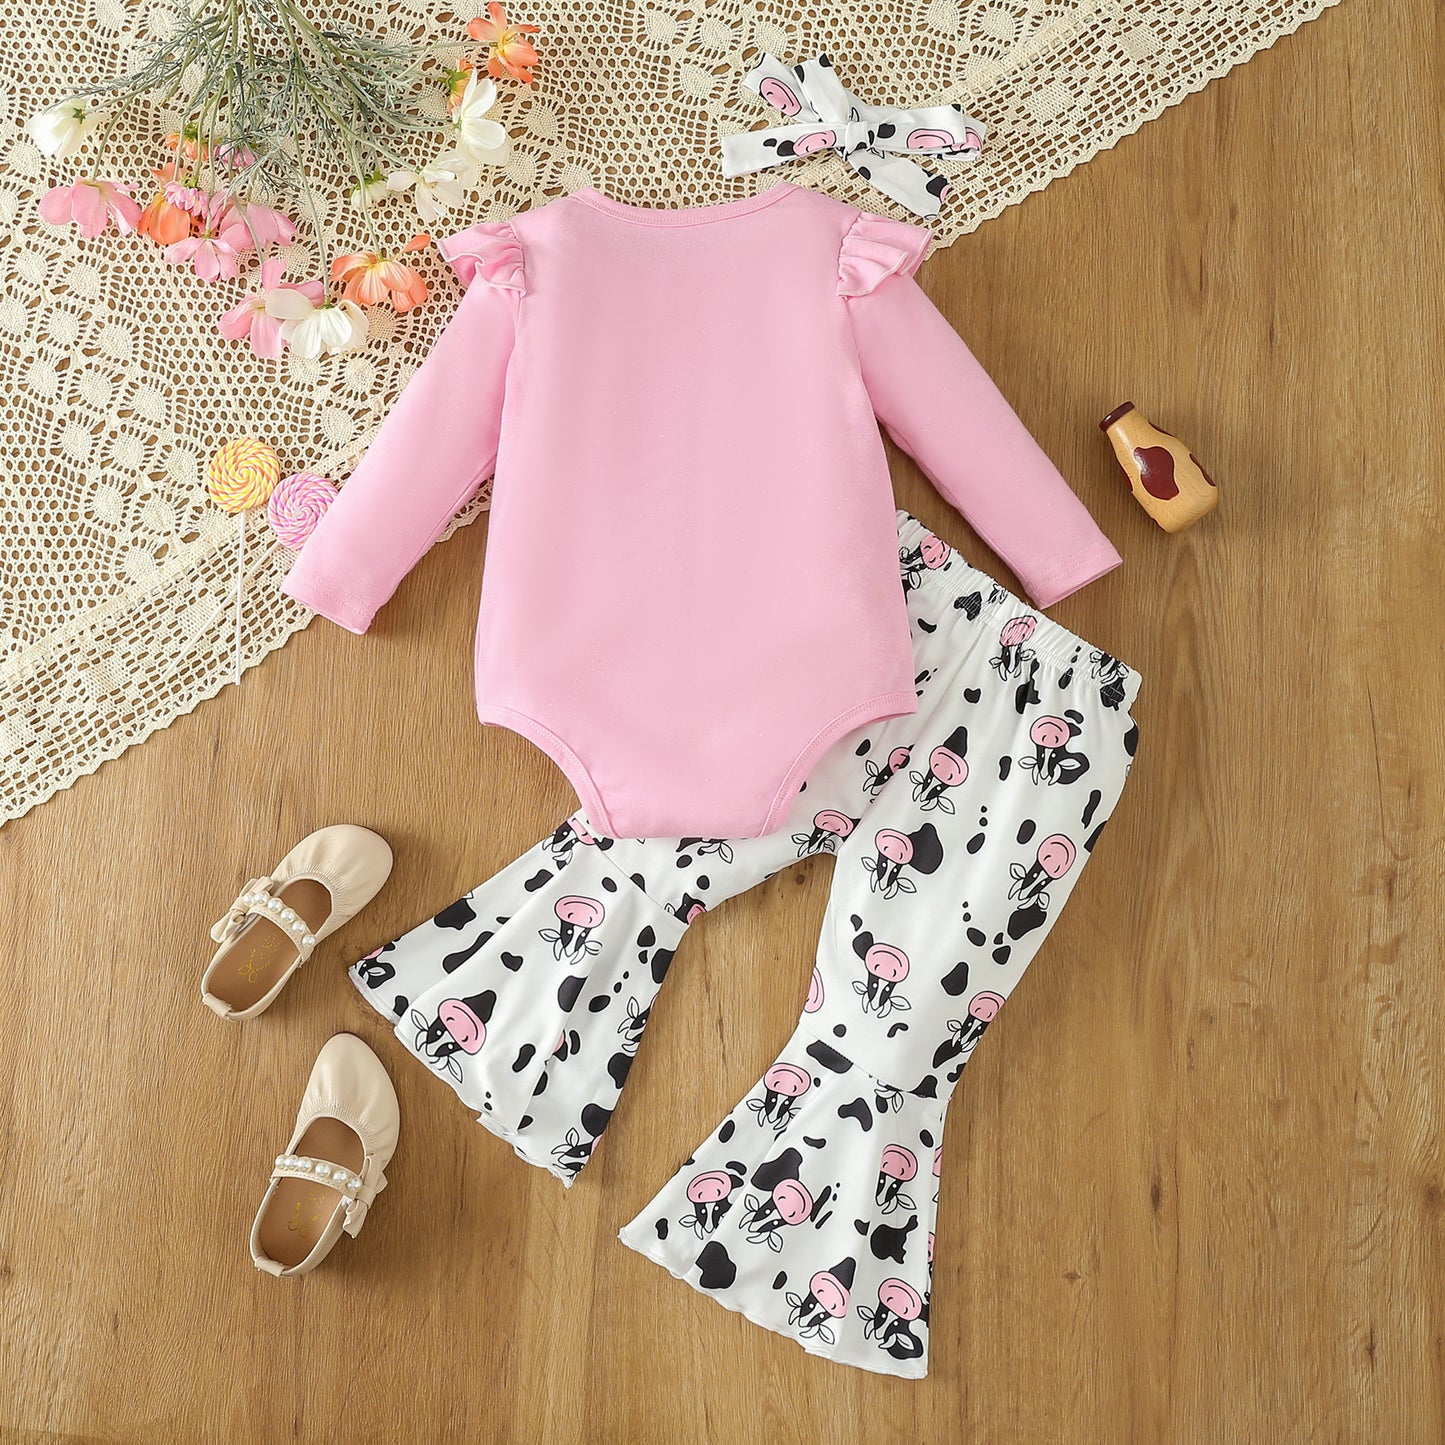 Infant Toddler Clothing Girls Long-sleeve Suit